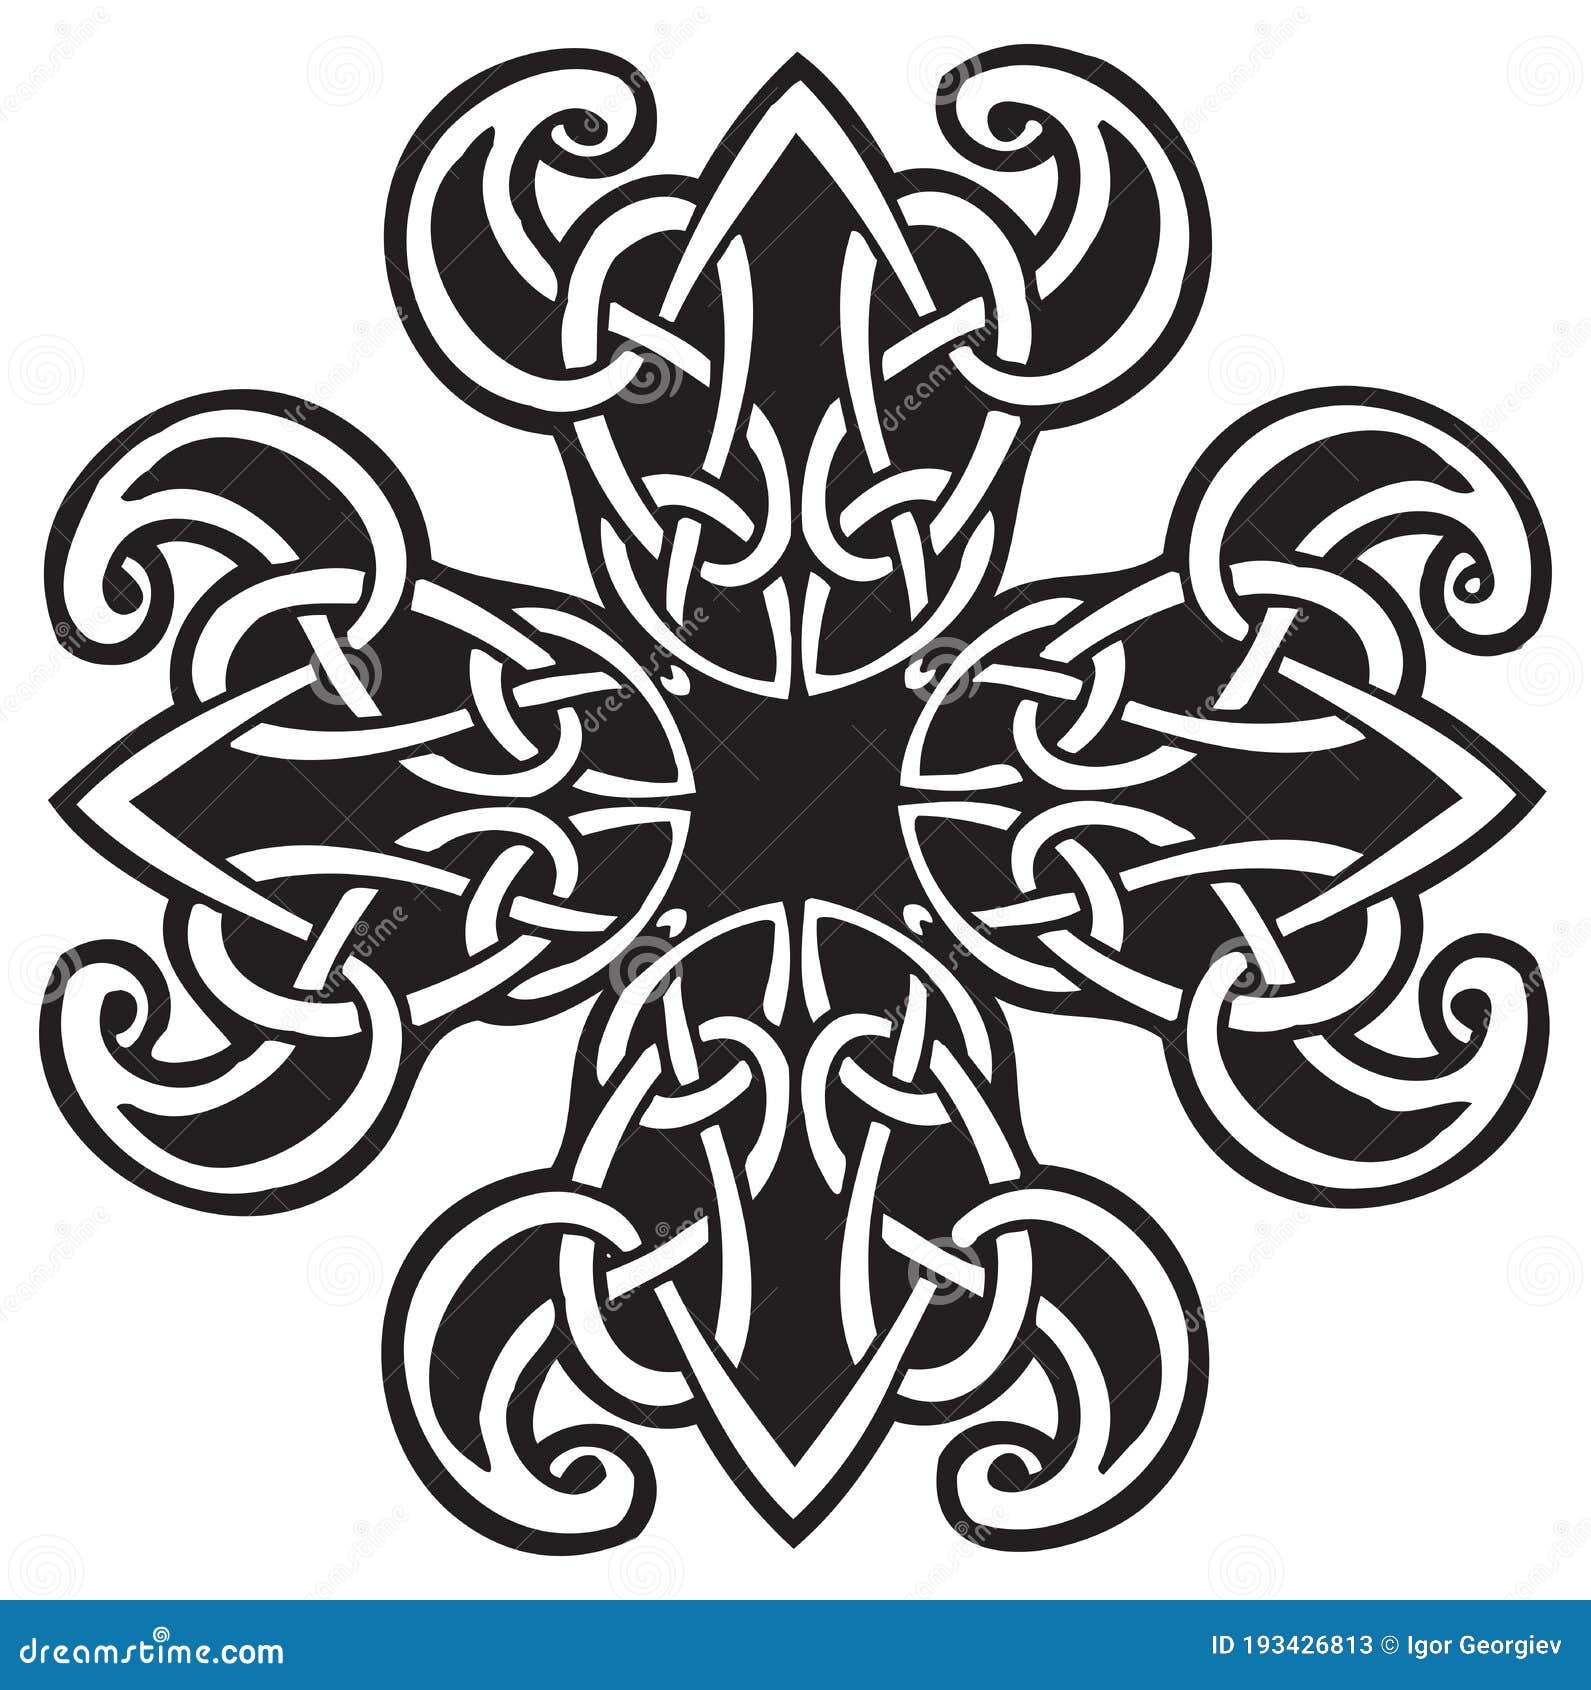 Decorative Celtic Knot Cross Tattoo Stock Vector - Illustration of logo,  black: 193426813